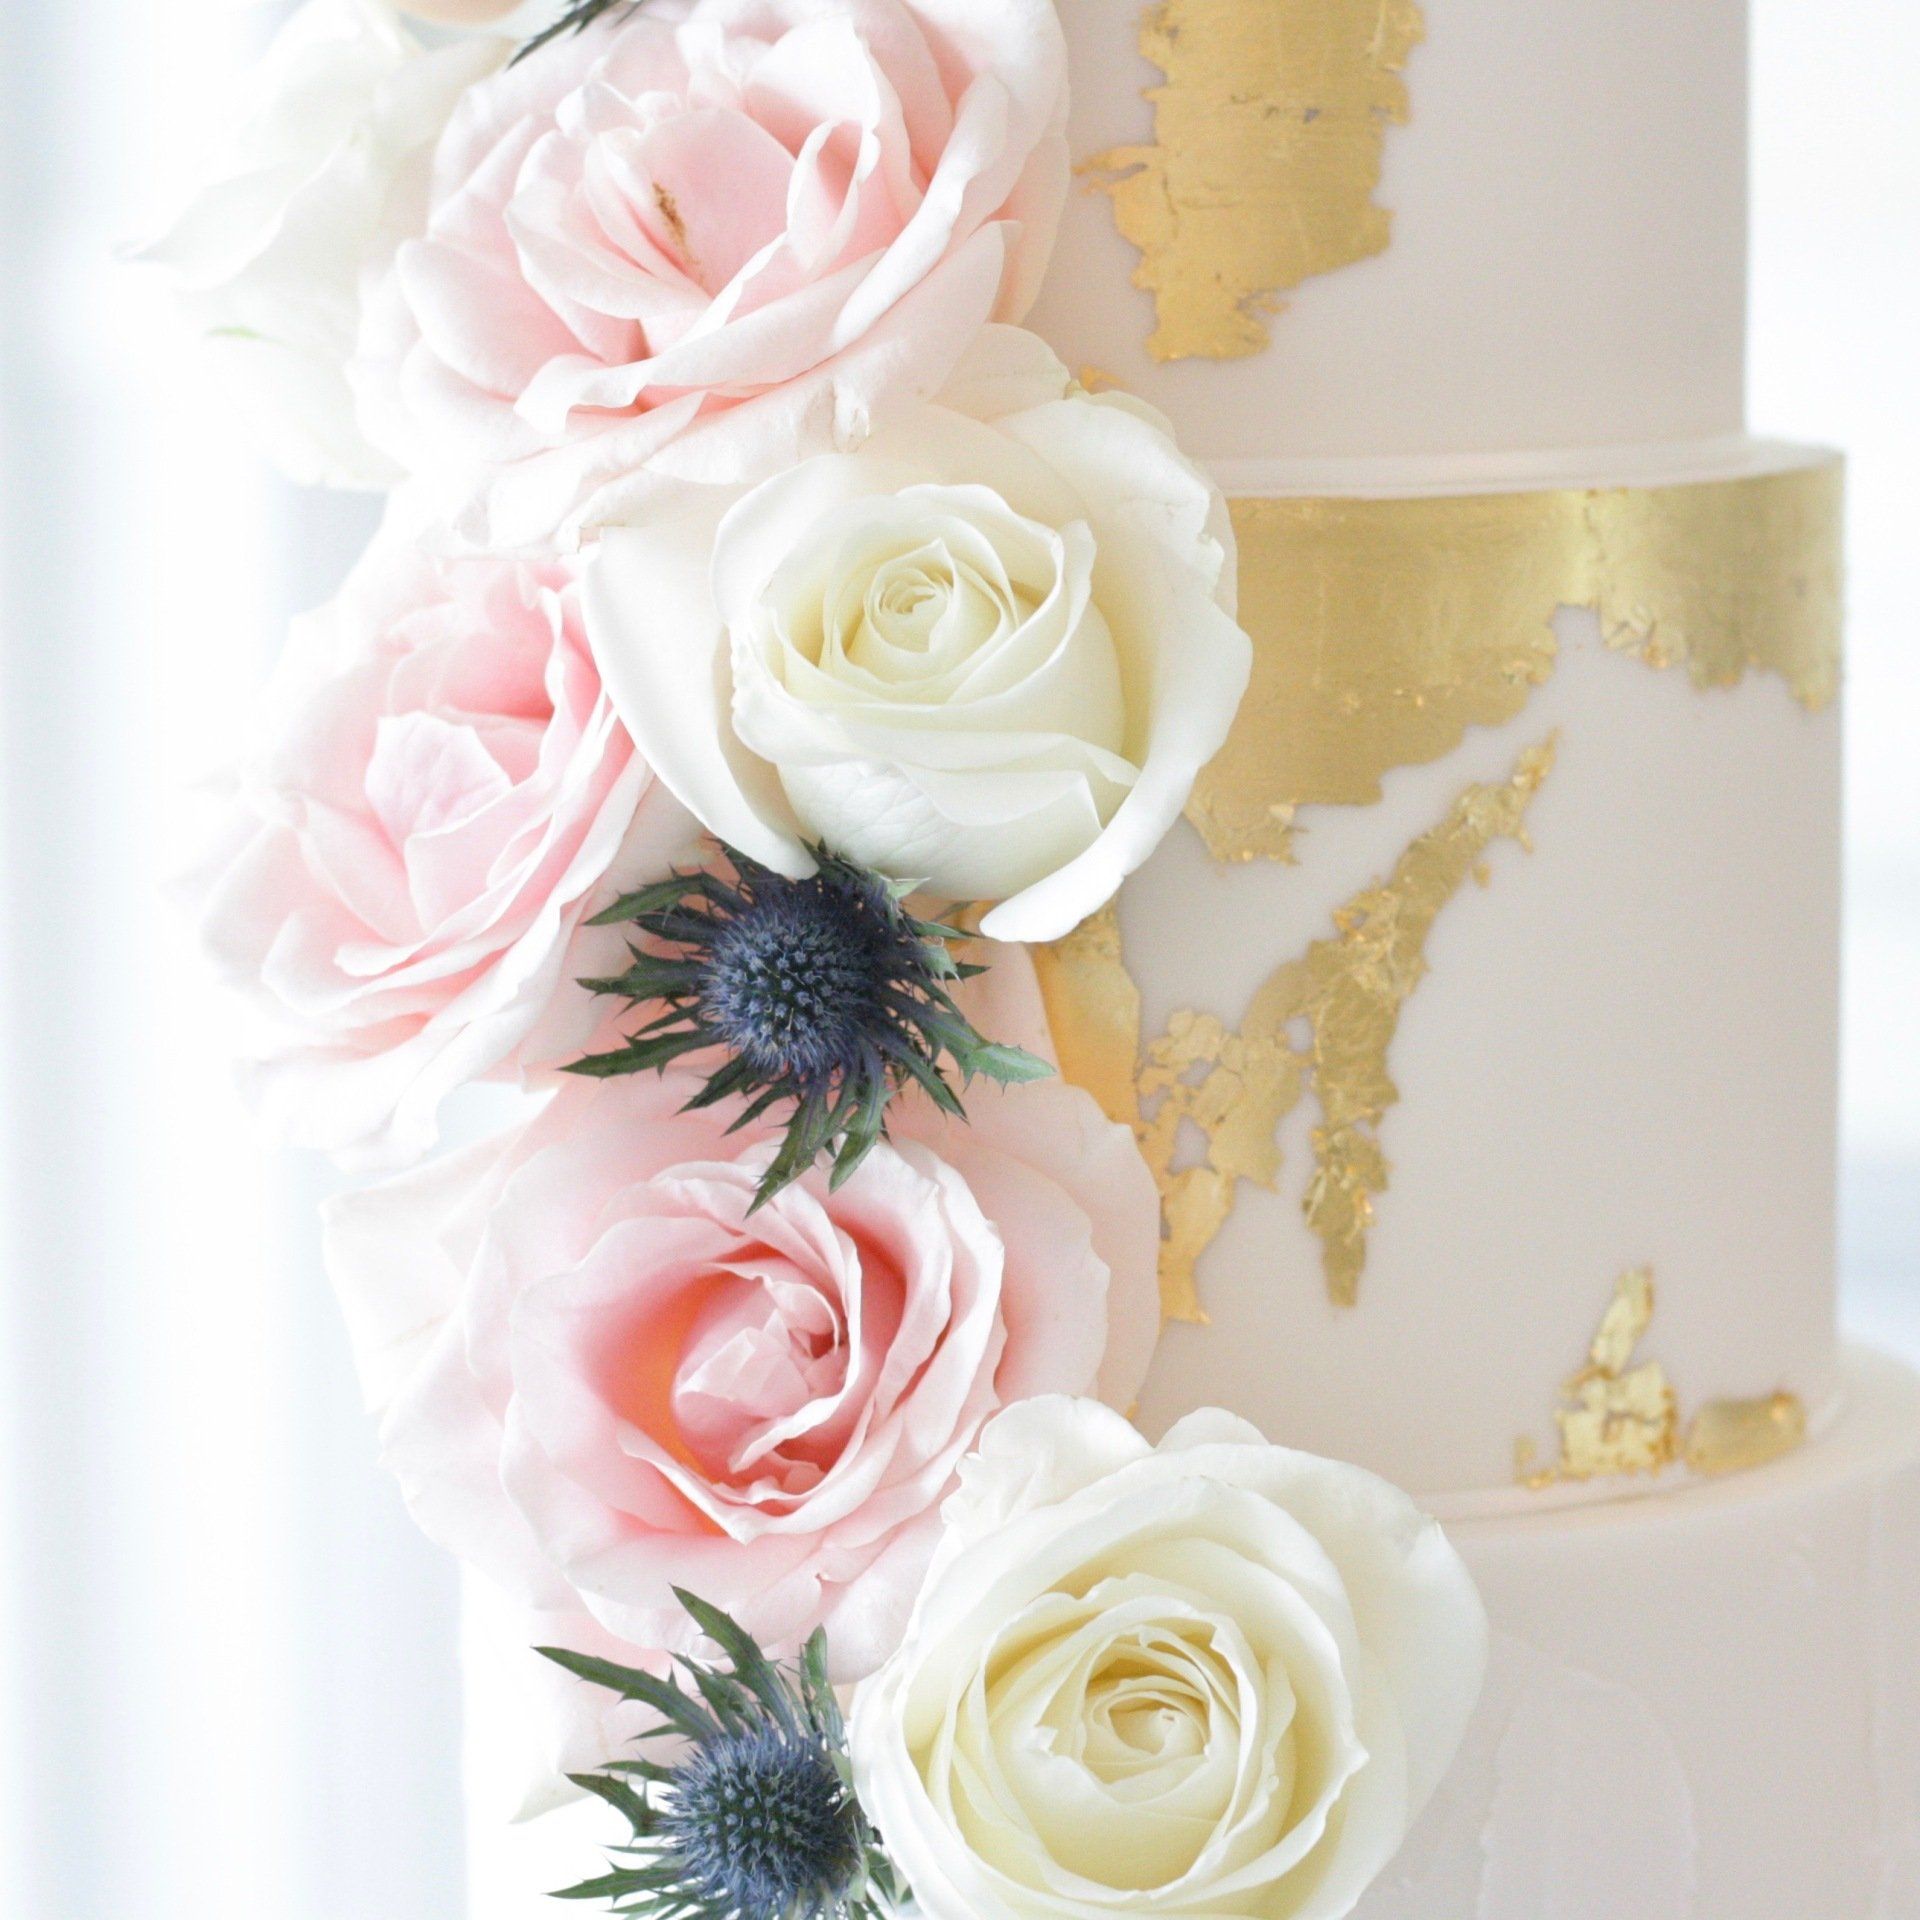 Gold leaf & roses wedding cake